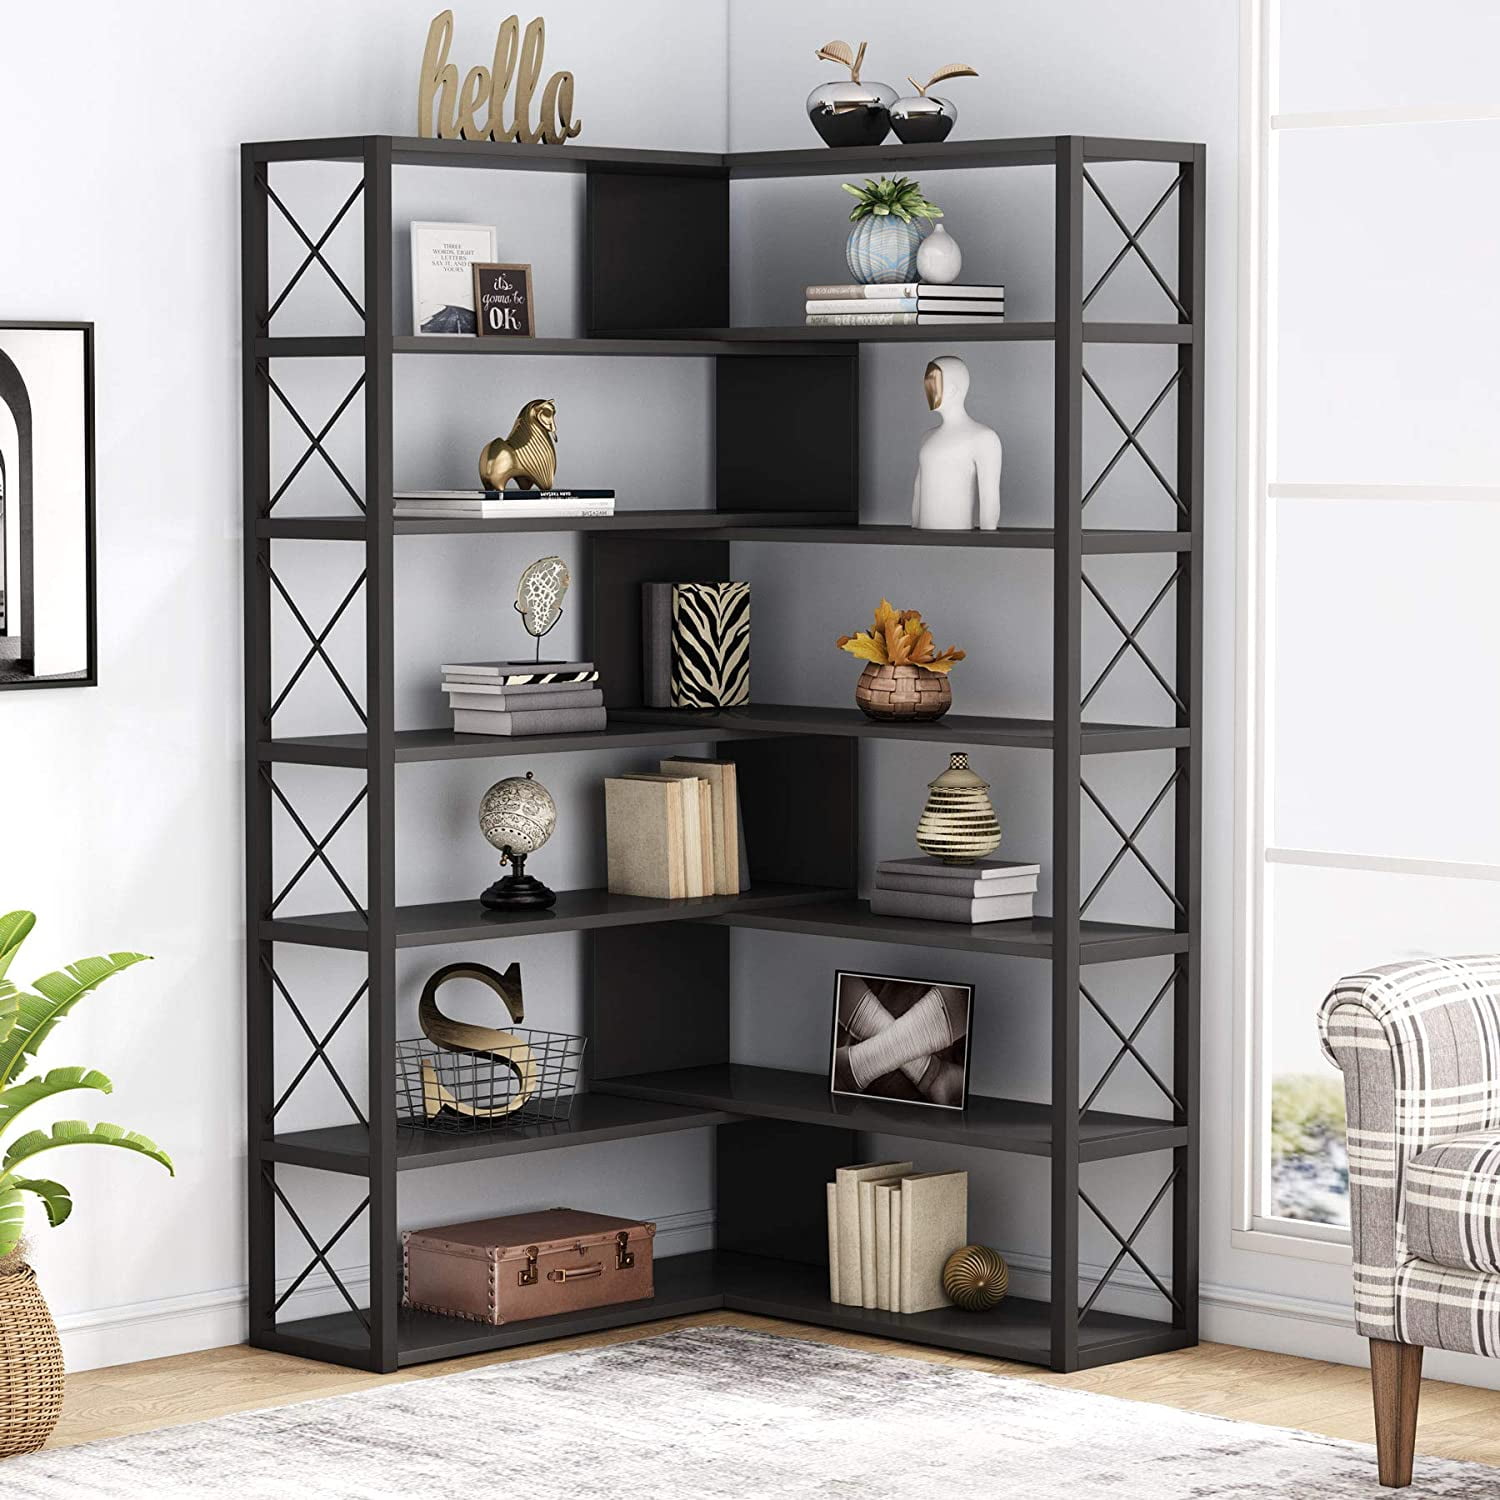 3 4 Tiers Bookshelf Bookcase Book Shelf Shelves Storage Display Unit Bedroom US 